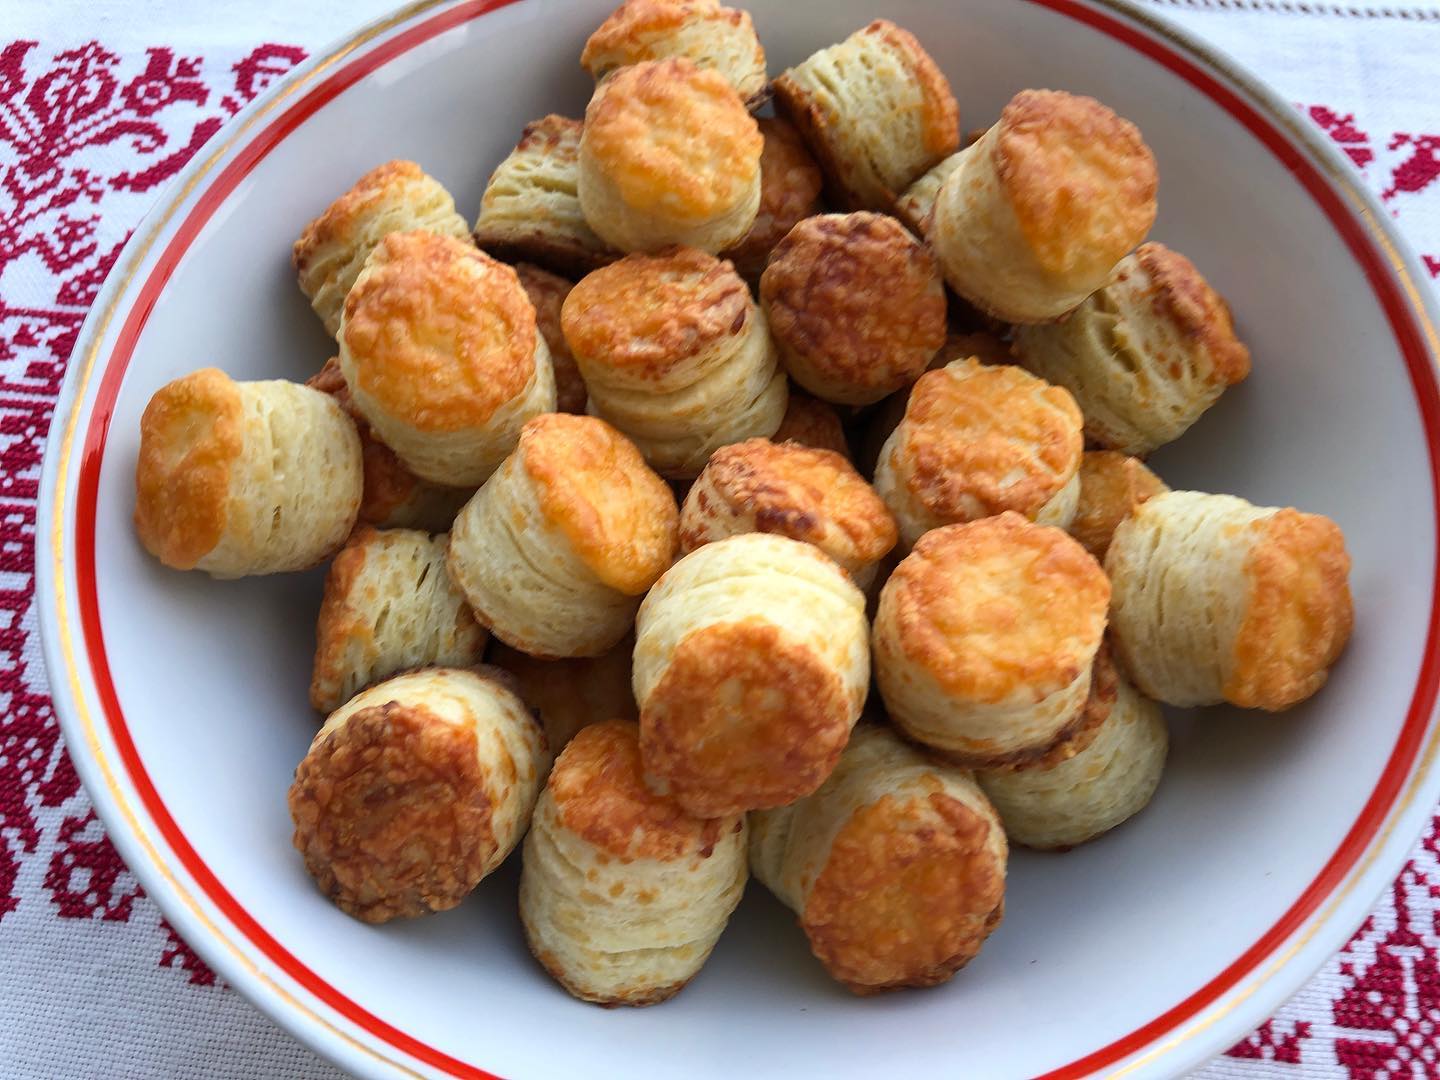 Hungarian savory biscuits - pogácsa - with sour cream and cheese
-
-
#christmasbaking #biscuits #savorybiscuits #pogácsa #tejfölöspogácsa #sajtospogácsa #baking #sütés #martacookingbaking #annuskámrecept @wannuskam #jönakarácsony